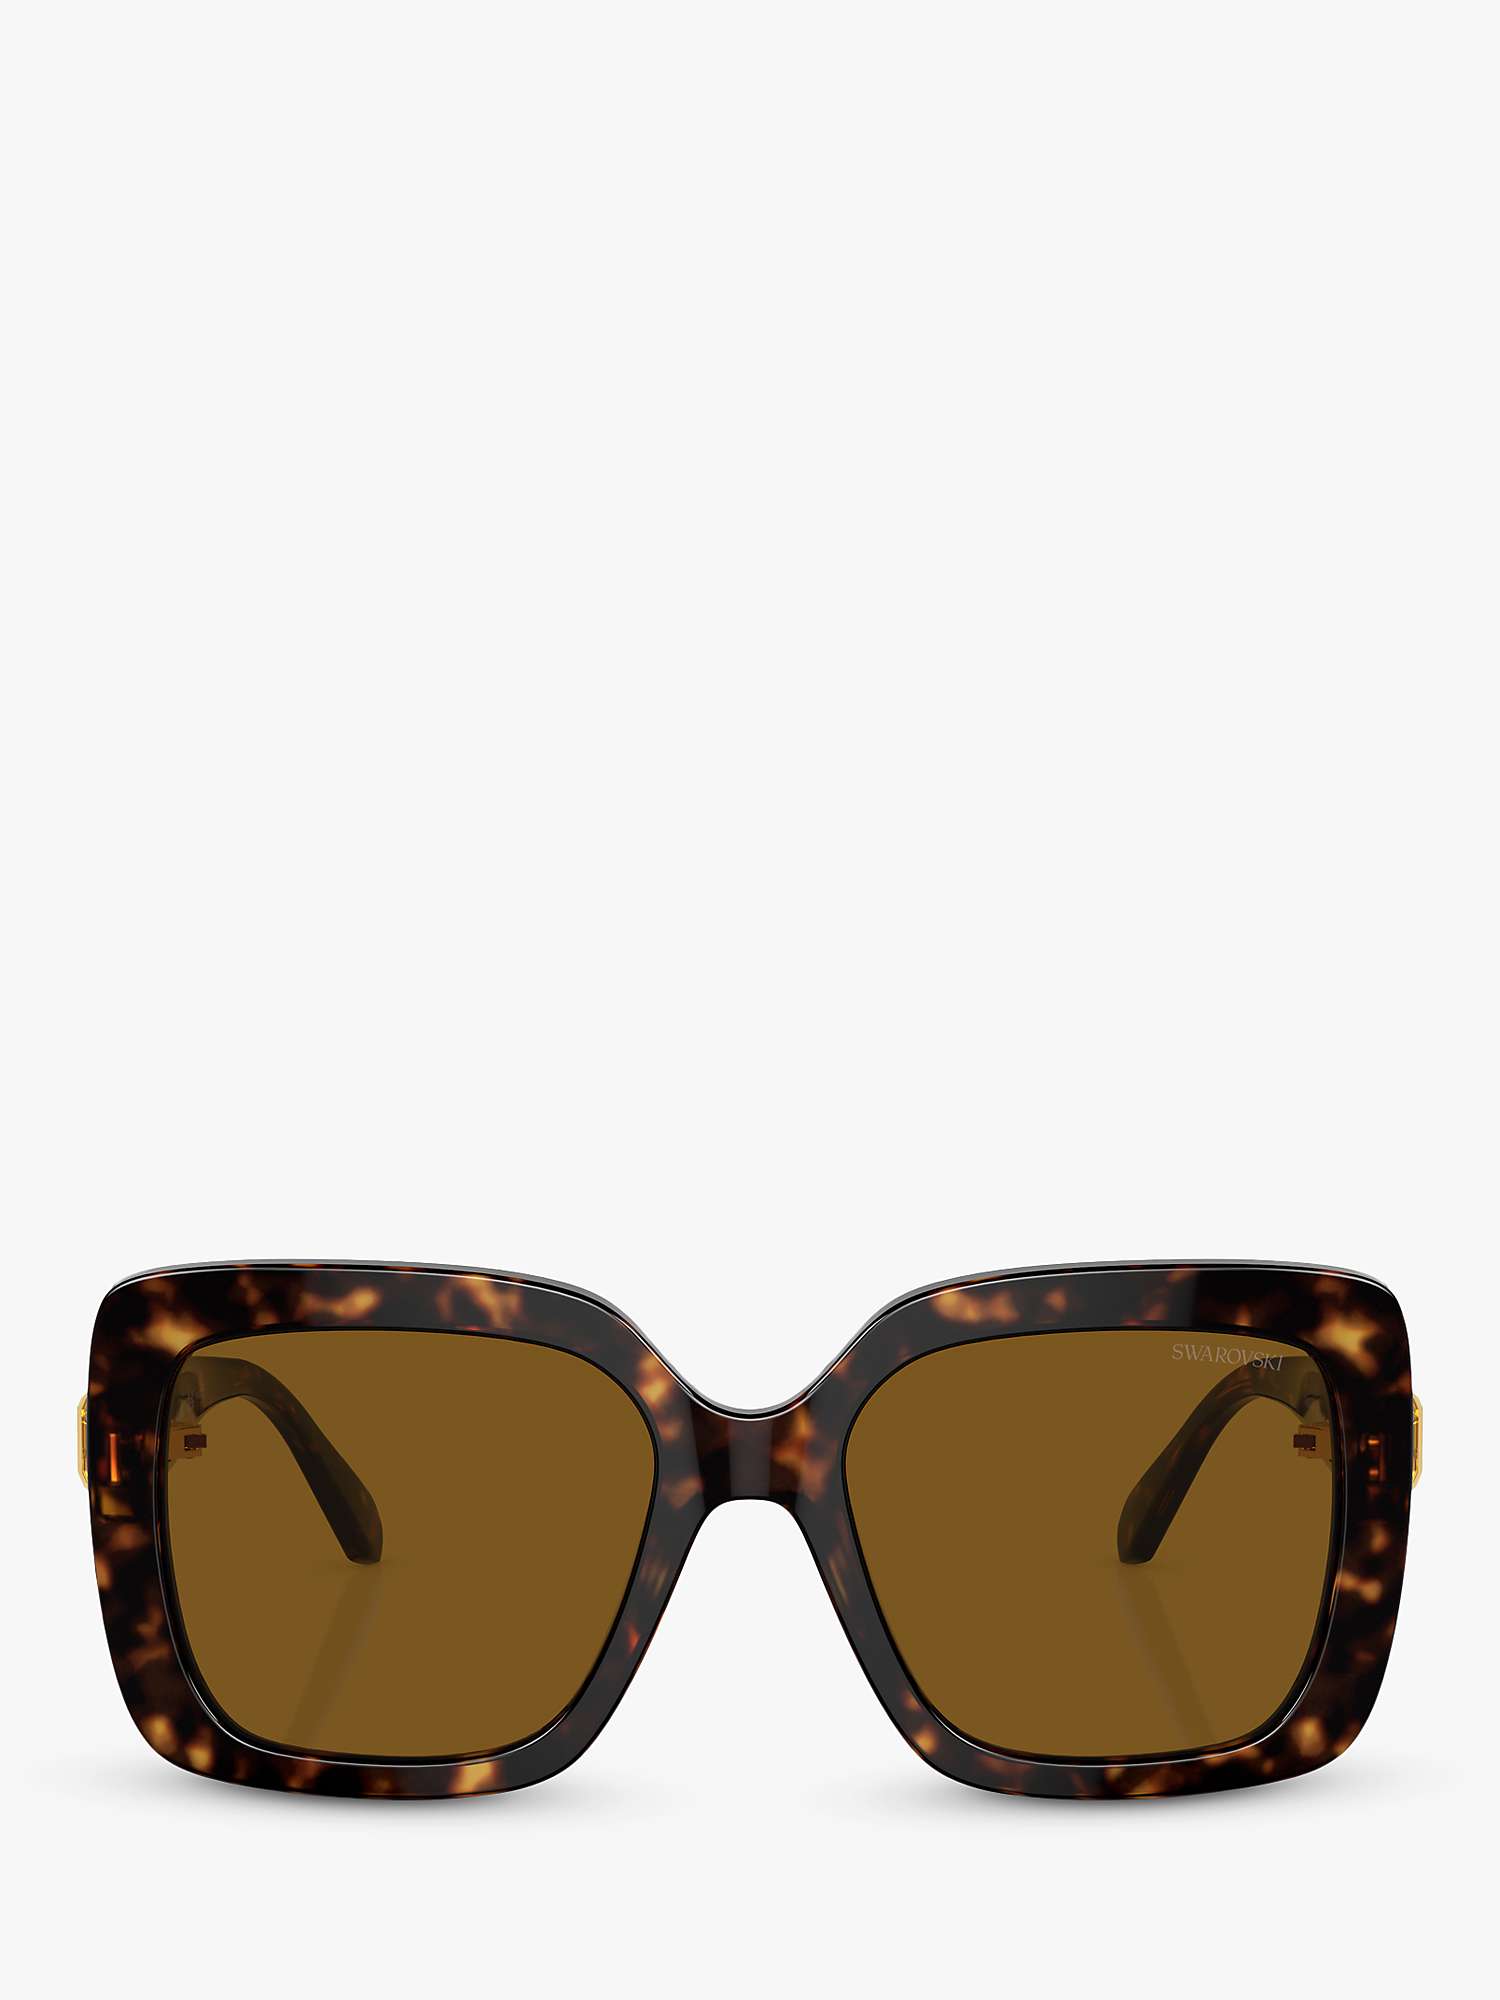 Buy Swarovski SK6001 Women's Polarised Square Sunglasses, Tortoiseshell/Havana Online at johnlewis.com